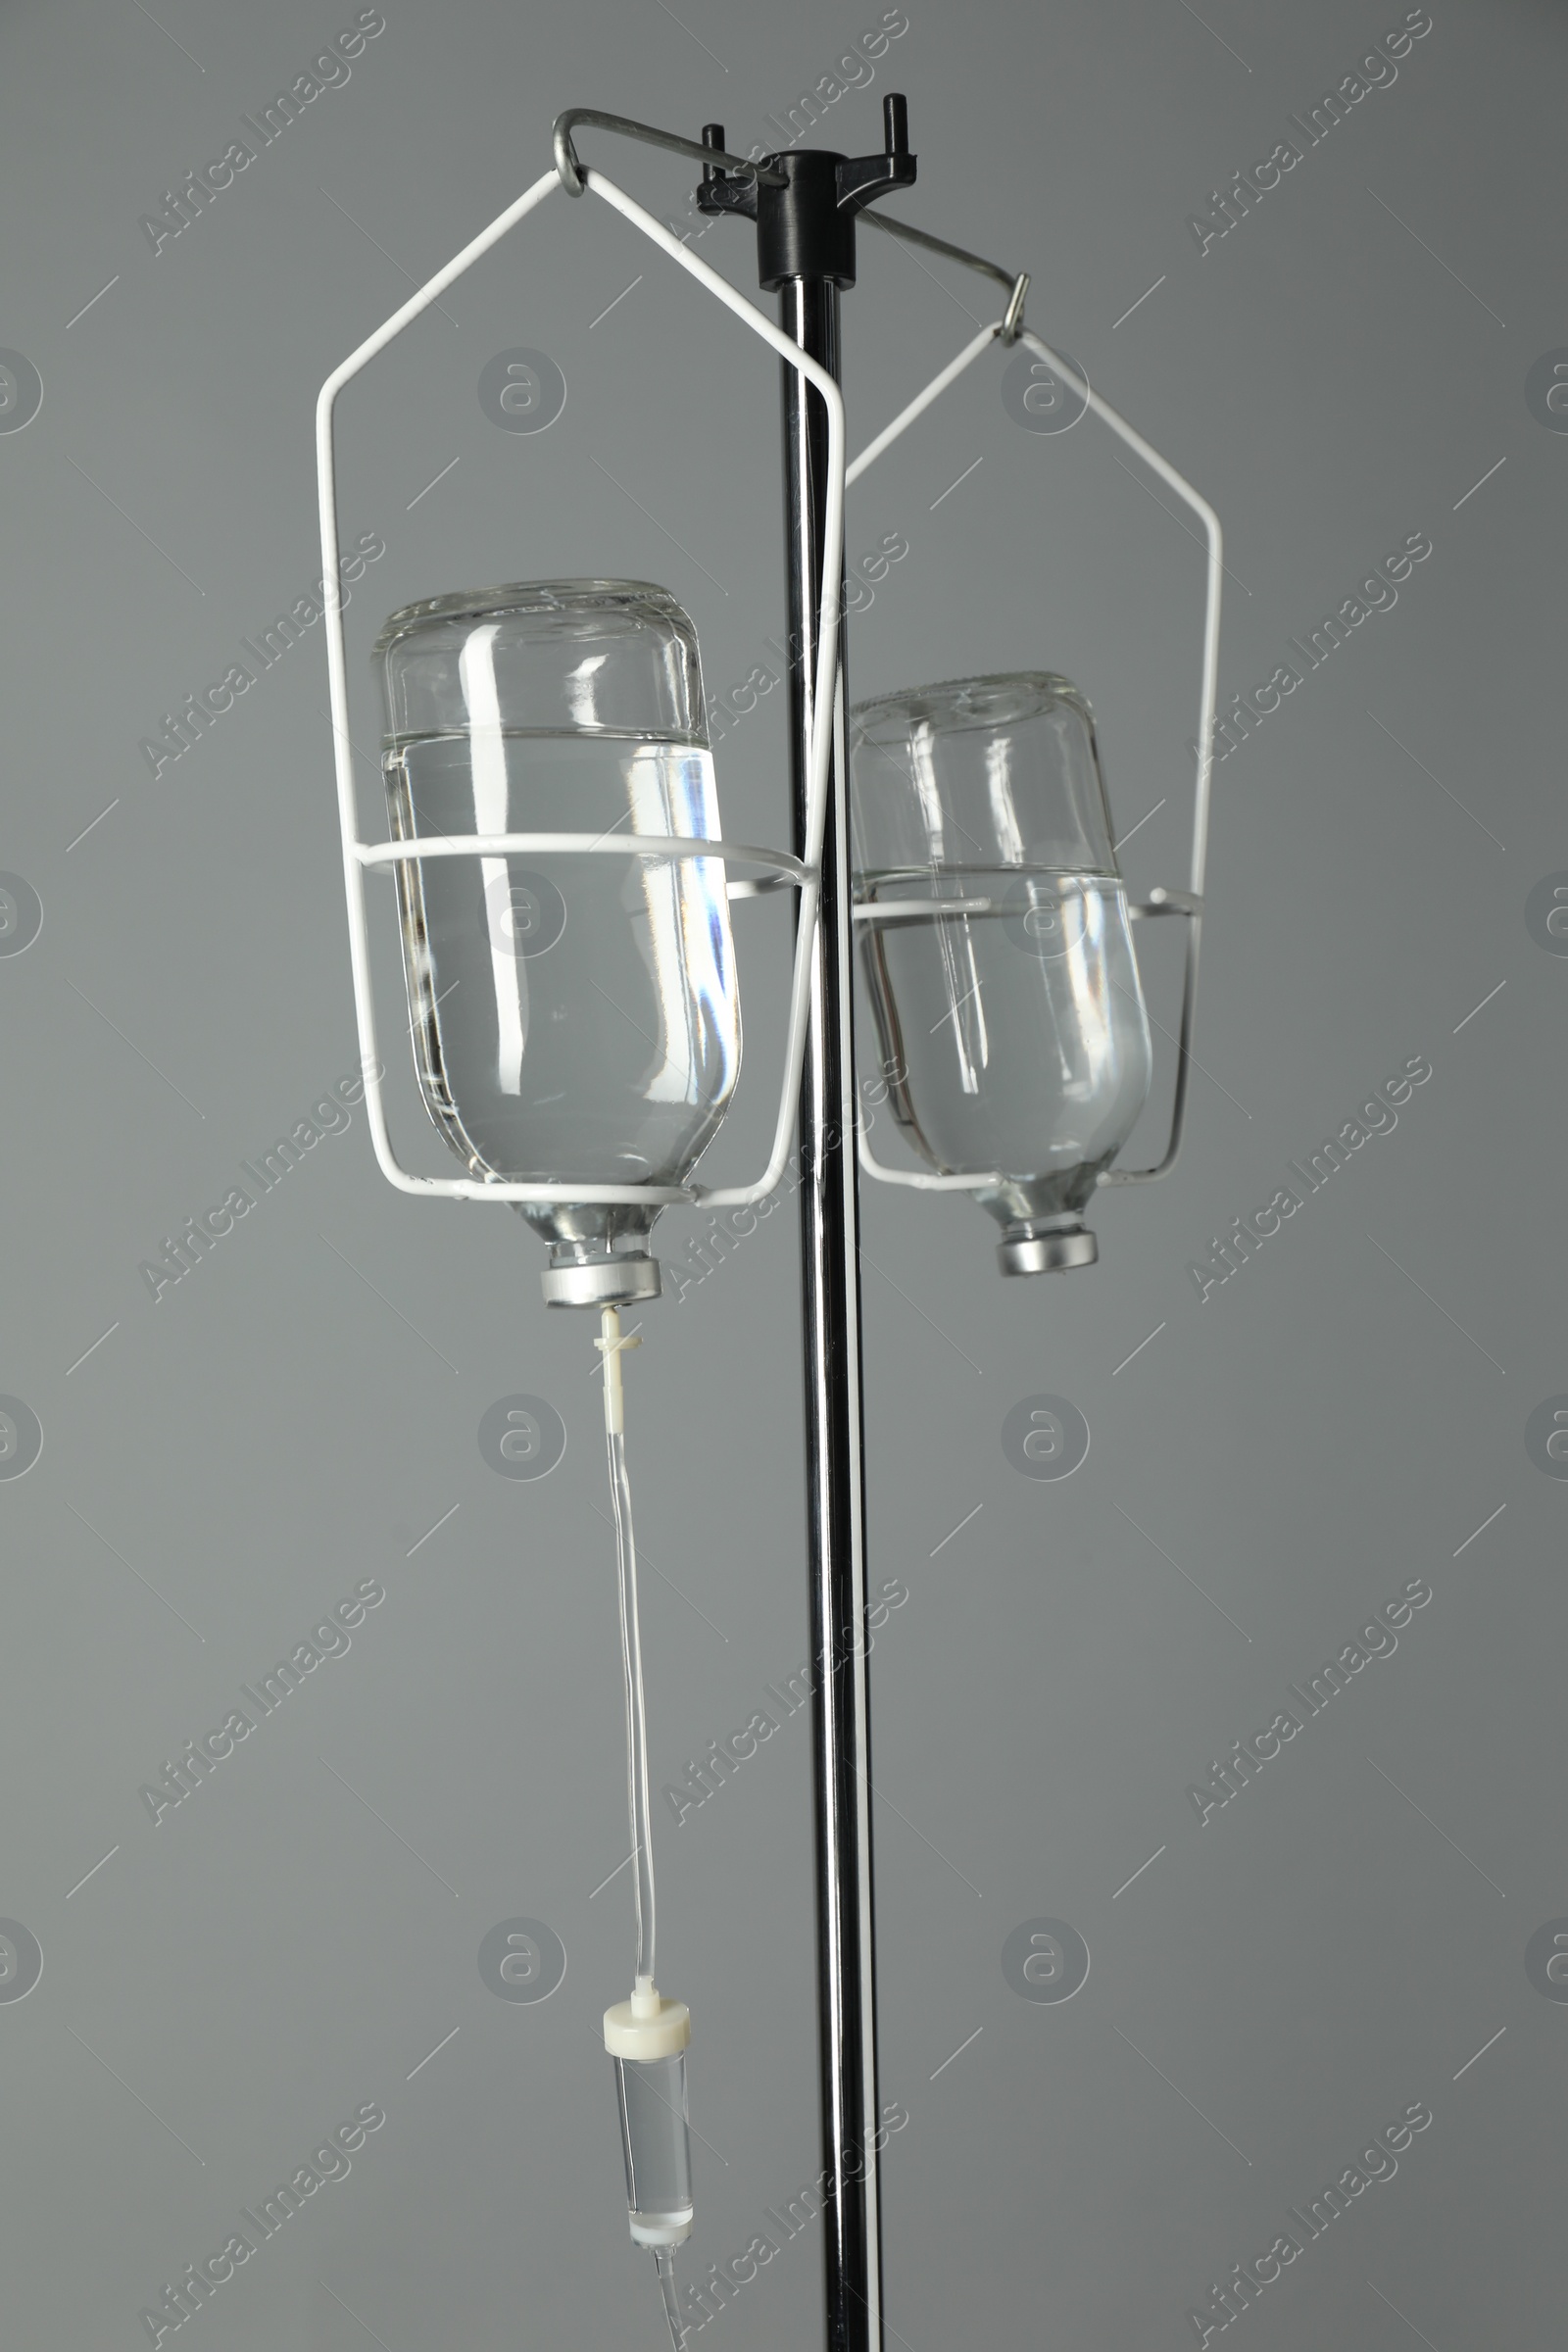 Photo of IV infusion set on pole against grey background